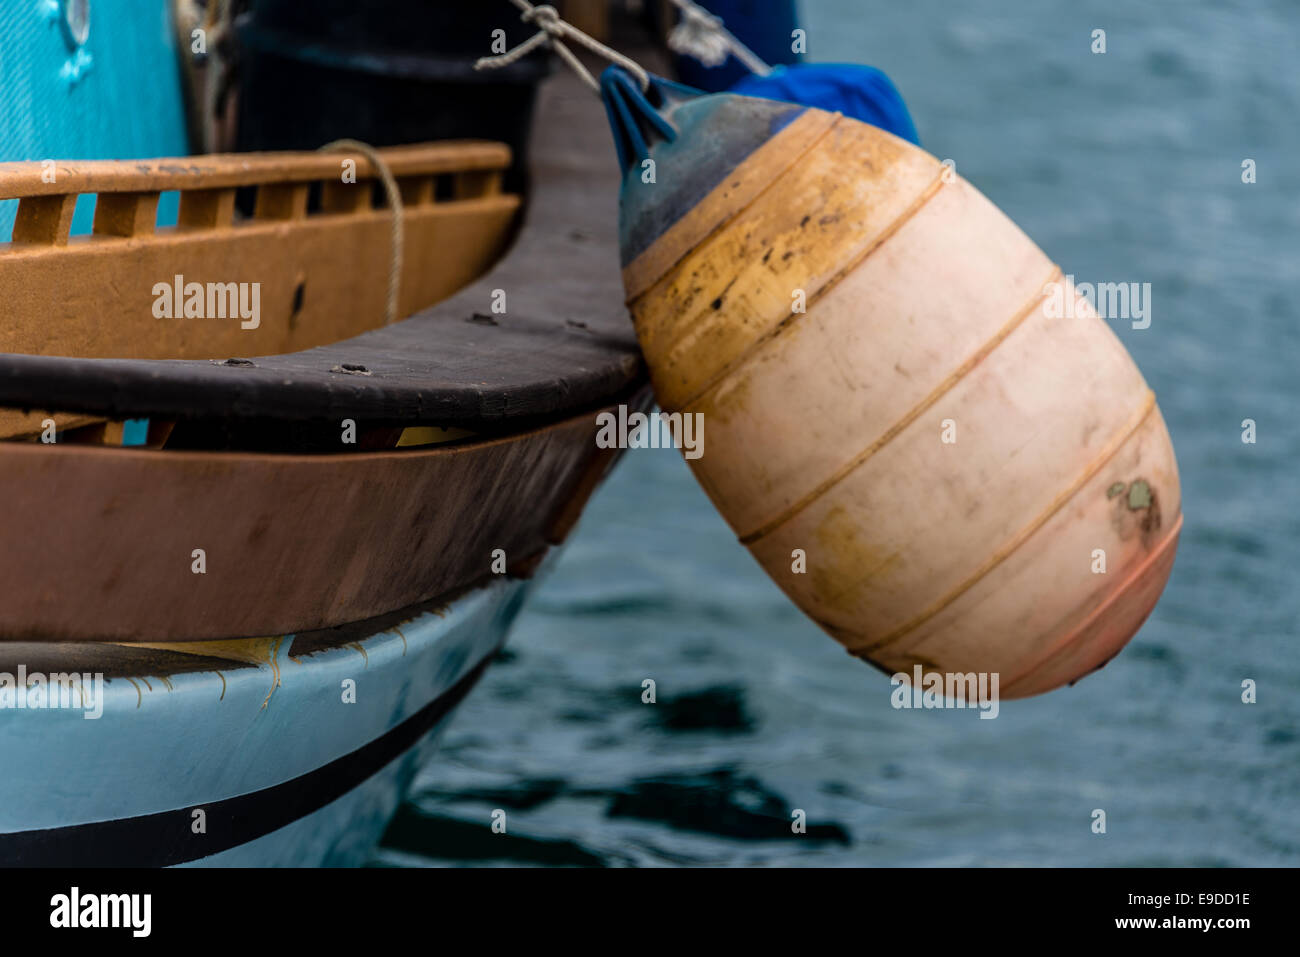 https://c8.alamy.com/comp/E9DD1E/boat-accessories-sea-trolling-fishing-heavy-lead-sinker-weight-with-E9DD1E.jpg